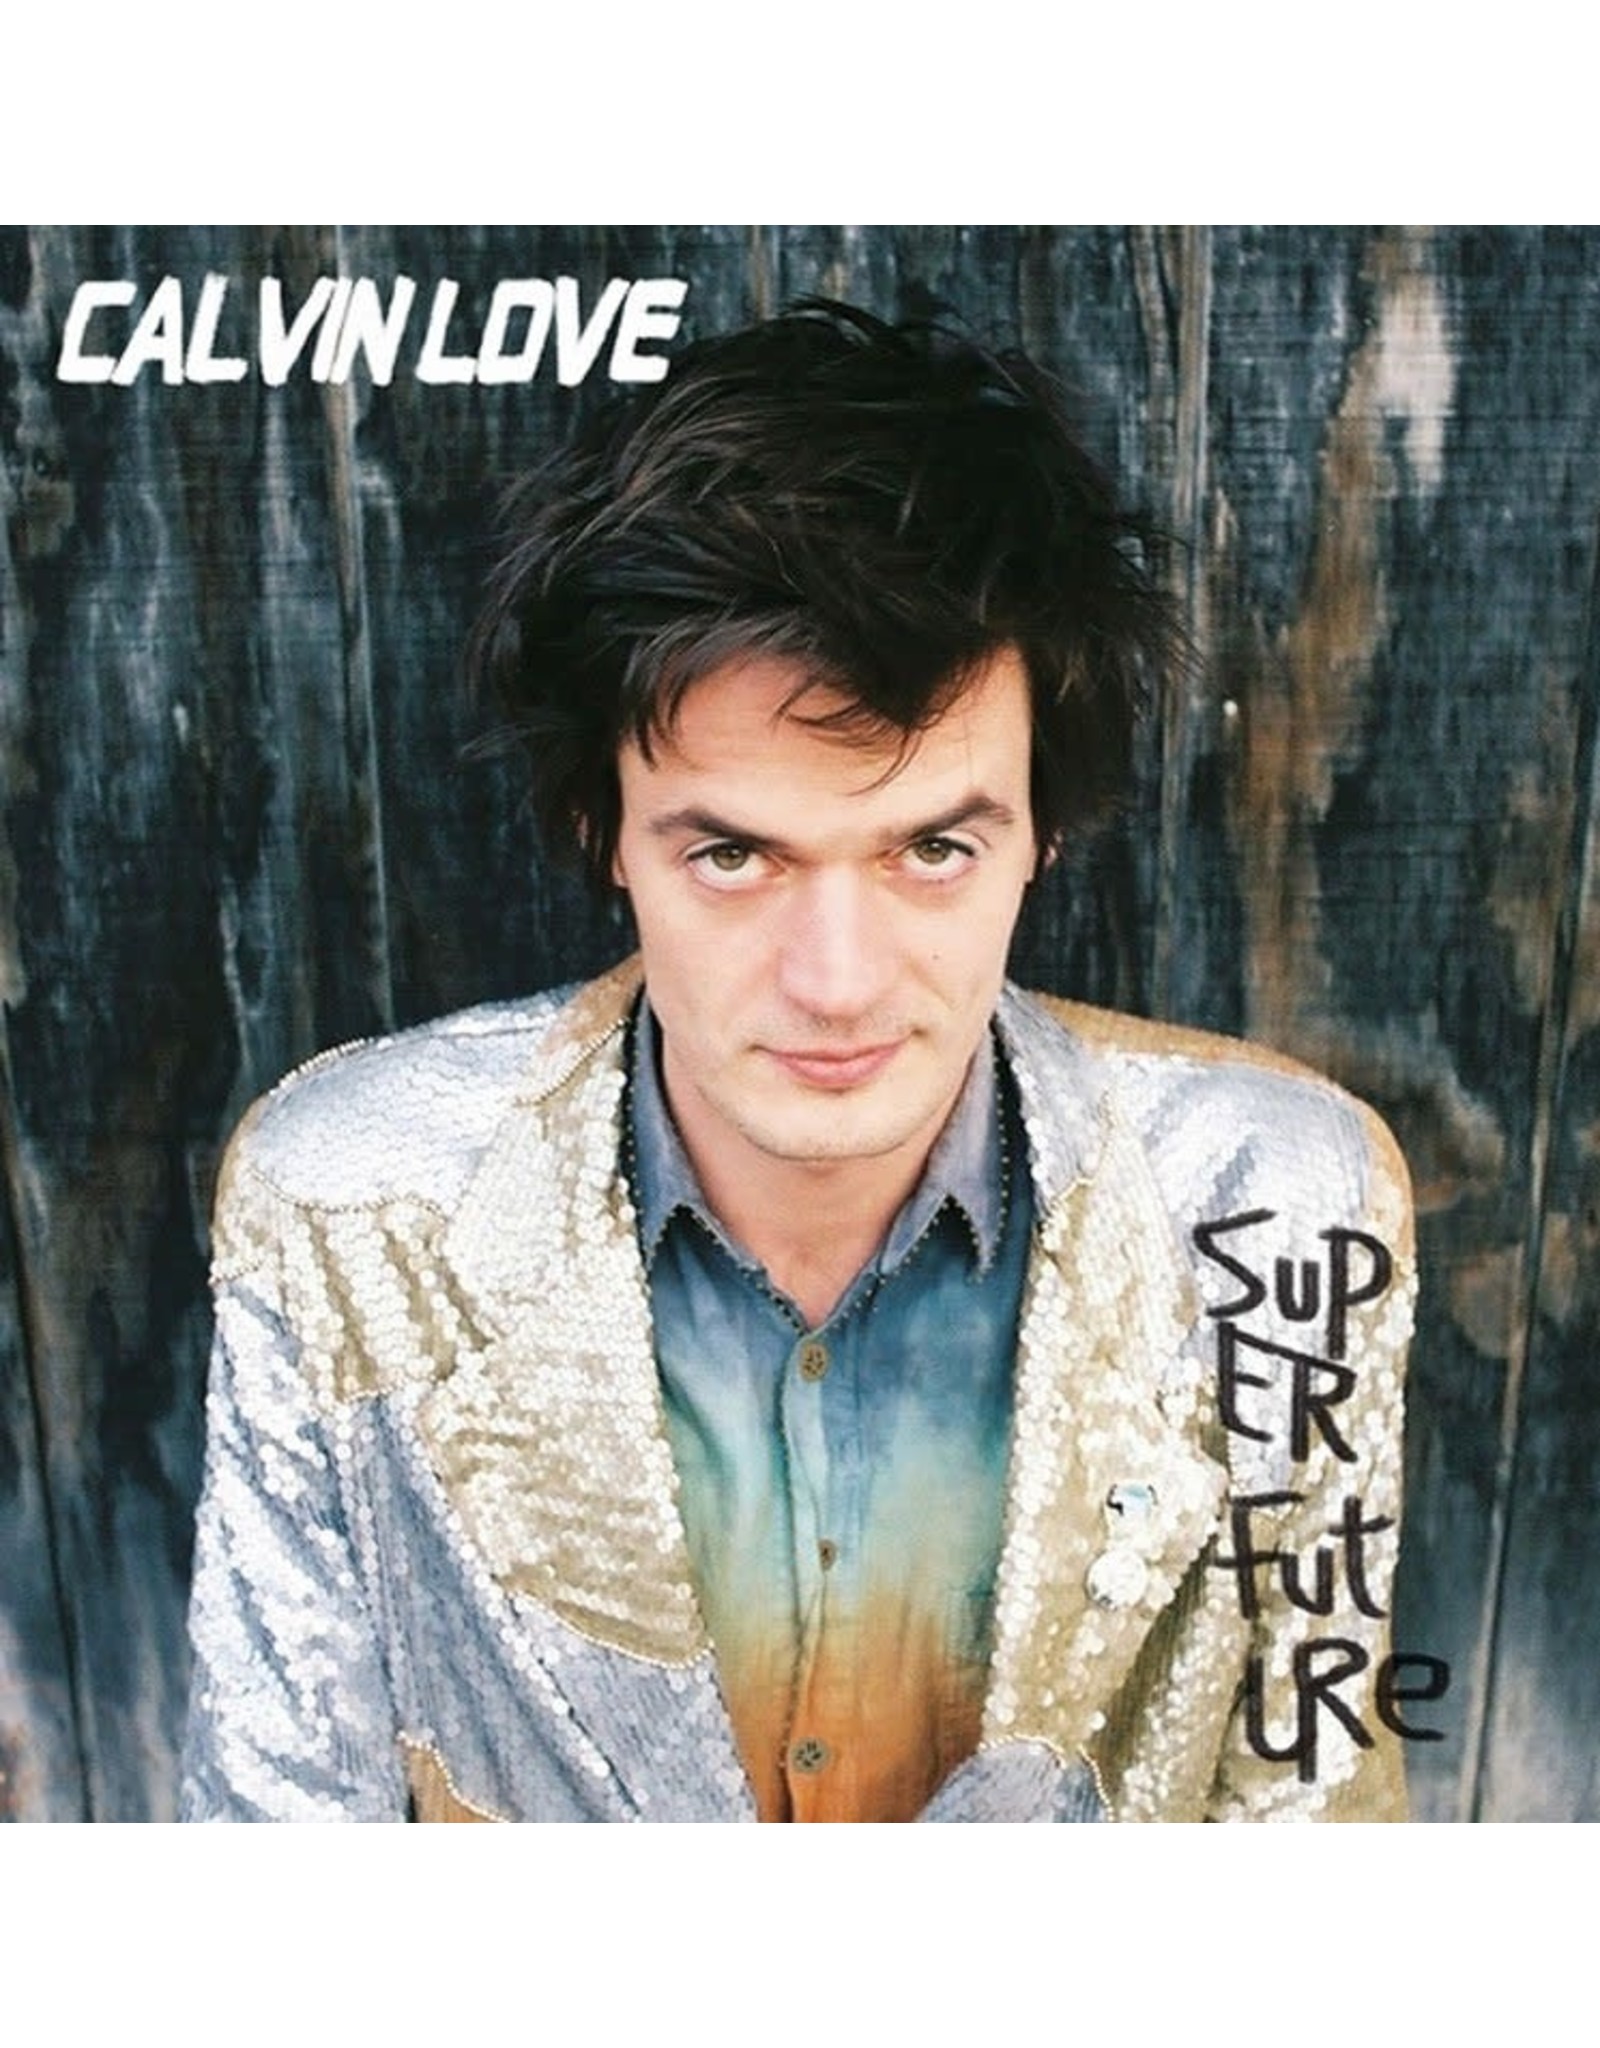 Love, Calvin - Super Future CD